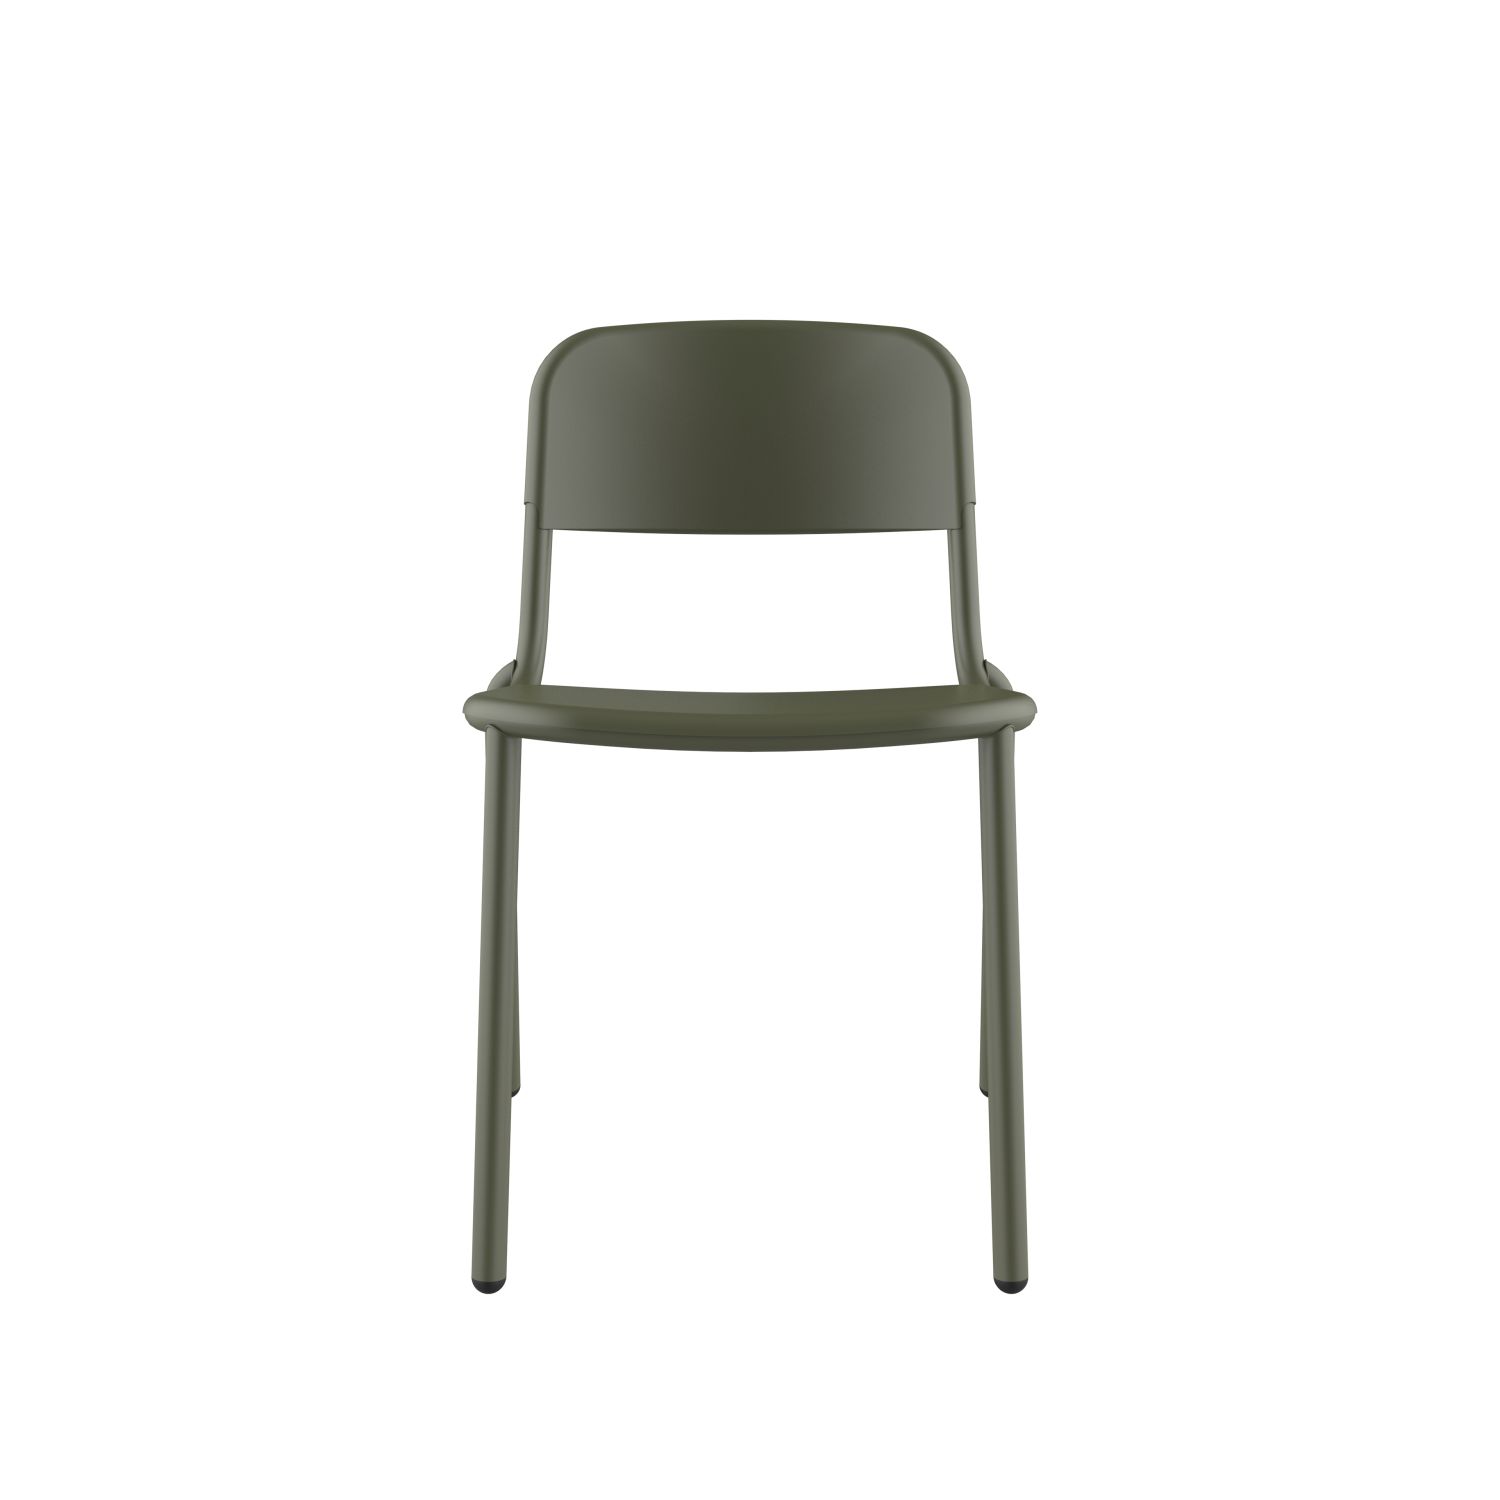 lensvelt studio stefan scholten loop chair stackable no armrests no perforation oyster white ral1013